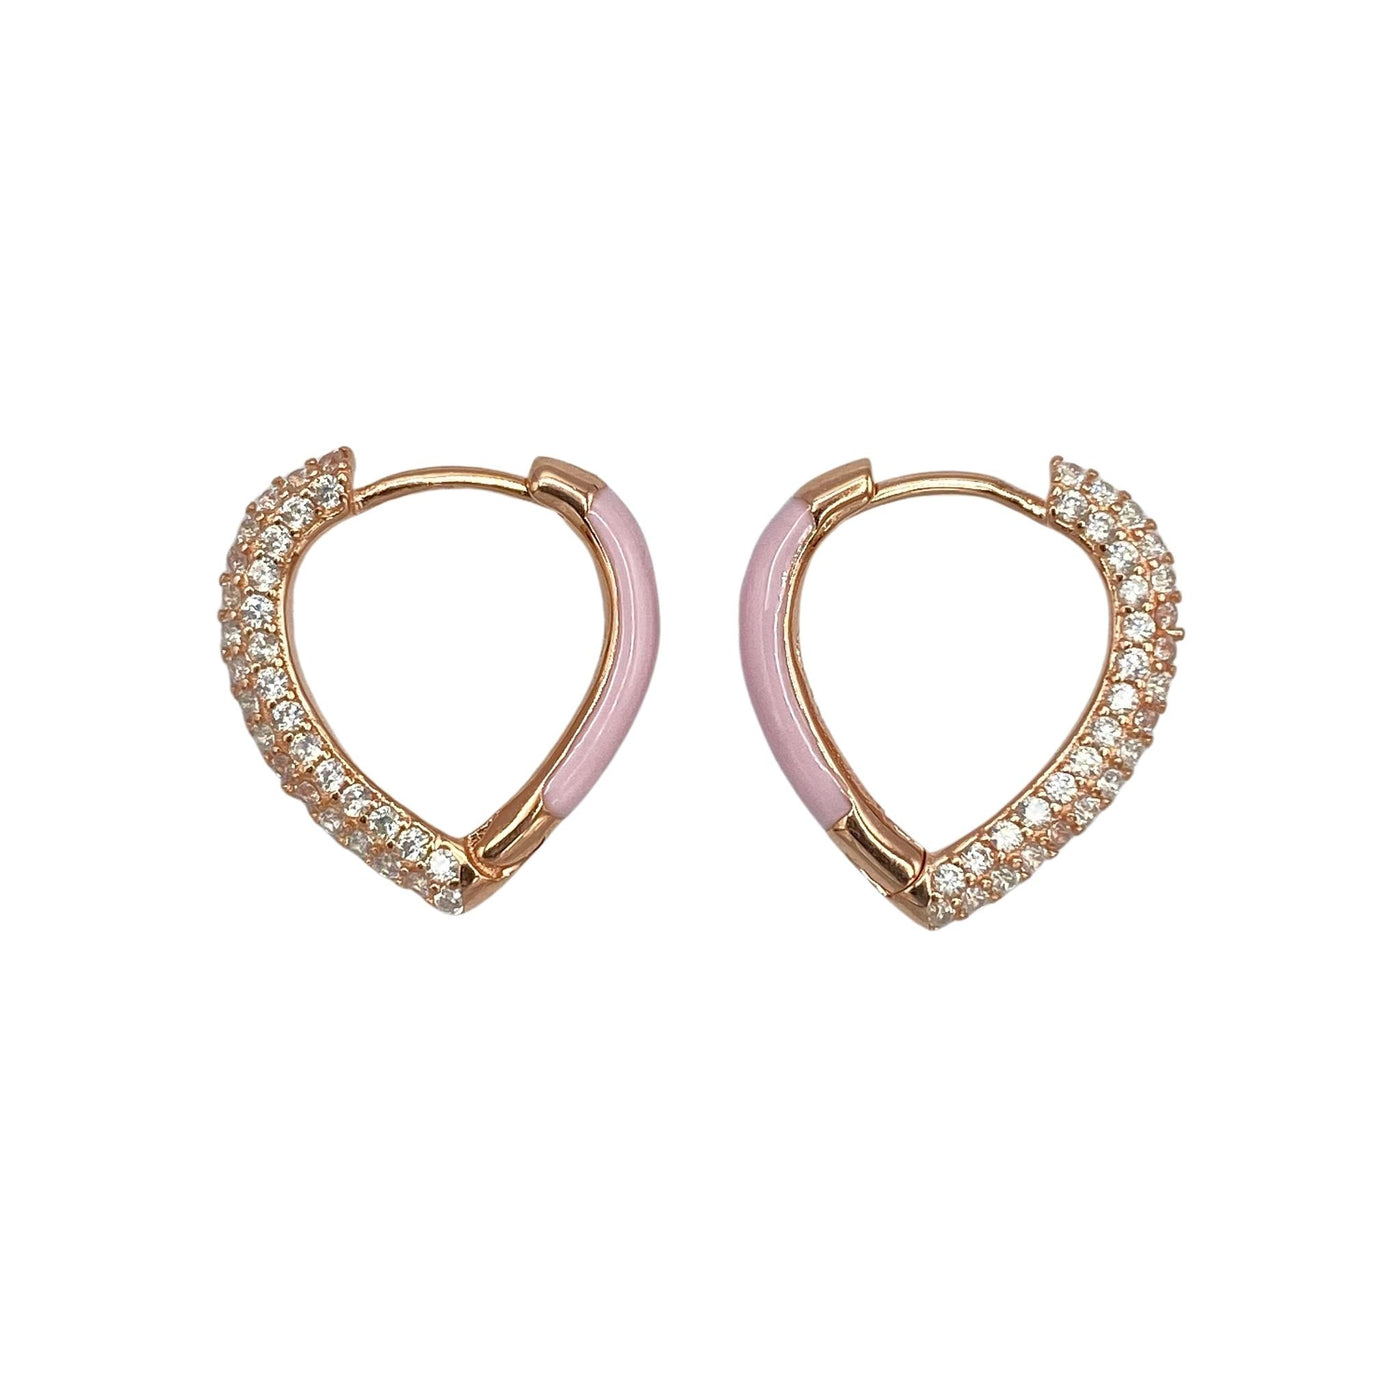 Silver heart-shaped earrings with enamel and zirconia